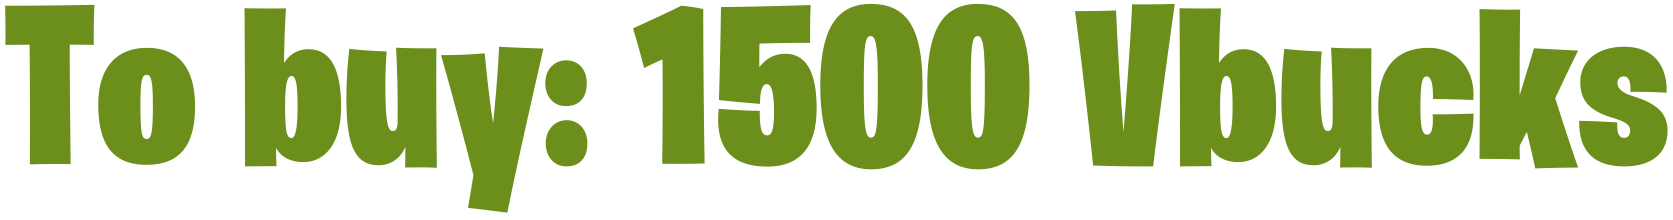 Vbucks Logo - To buy: 1500 Vbucks Fortnite Logo - Generated To buy: 1500 Vbucks